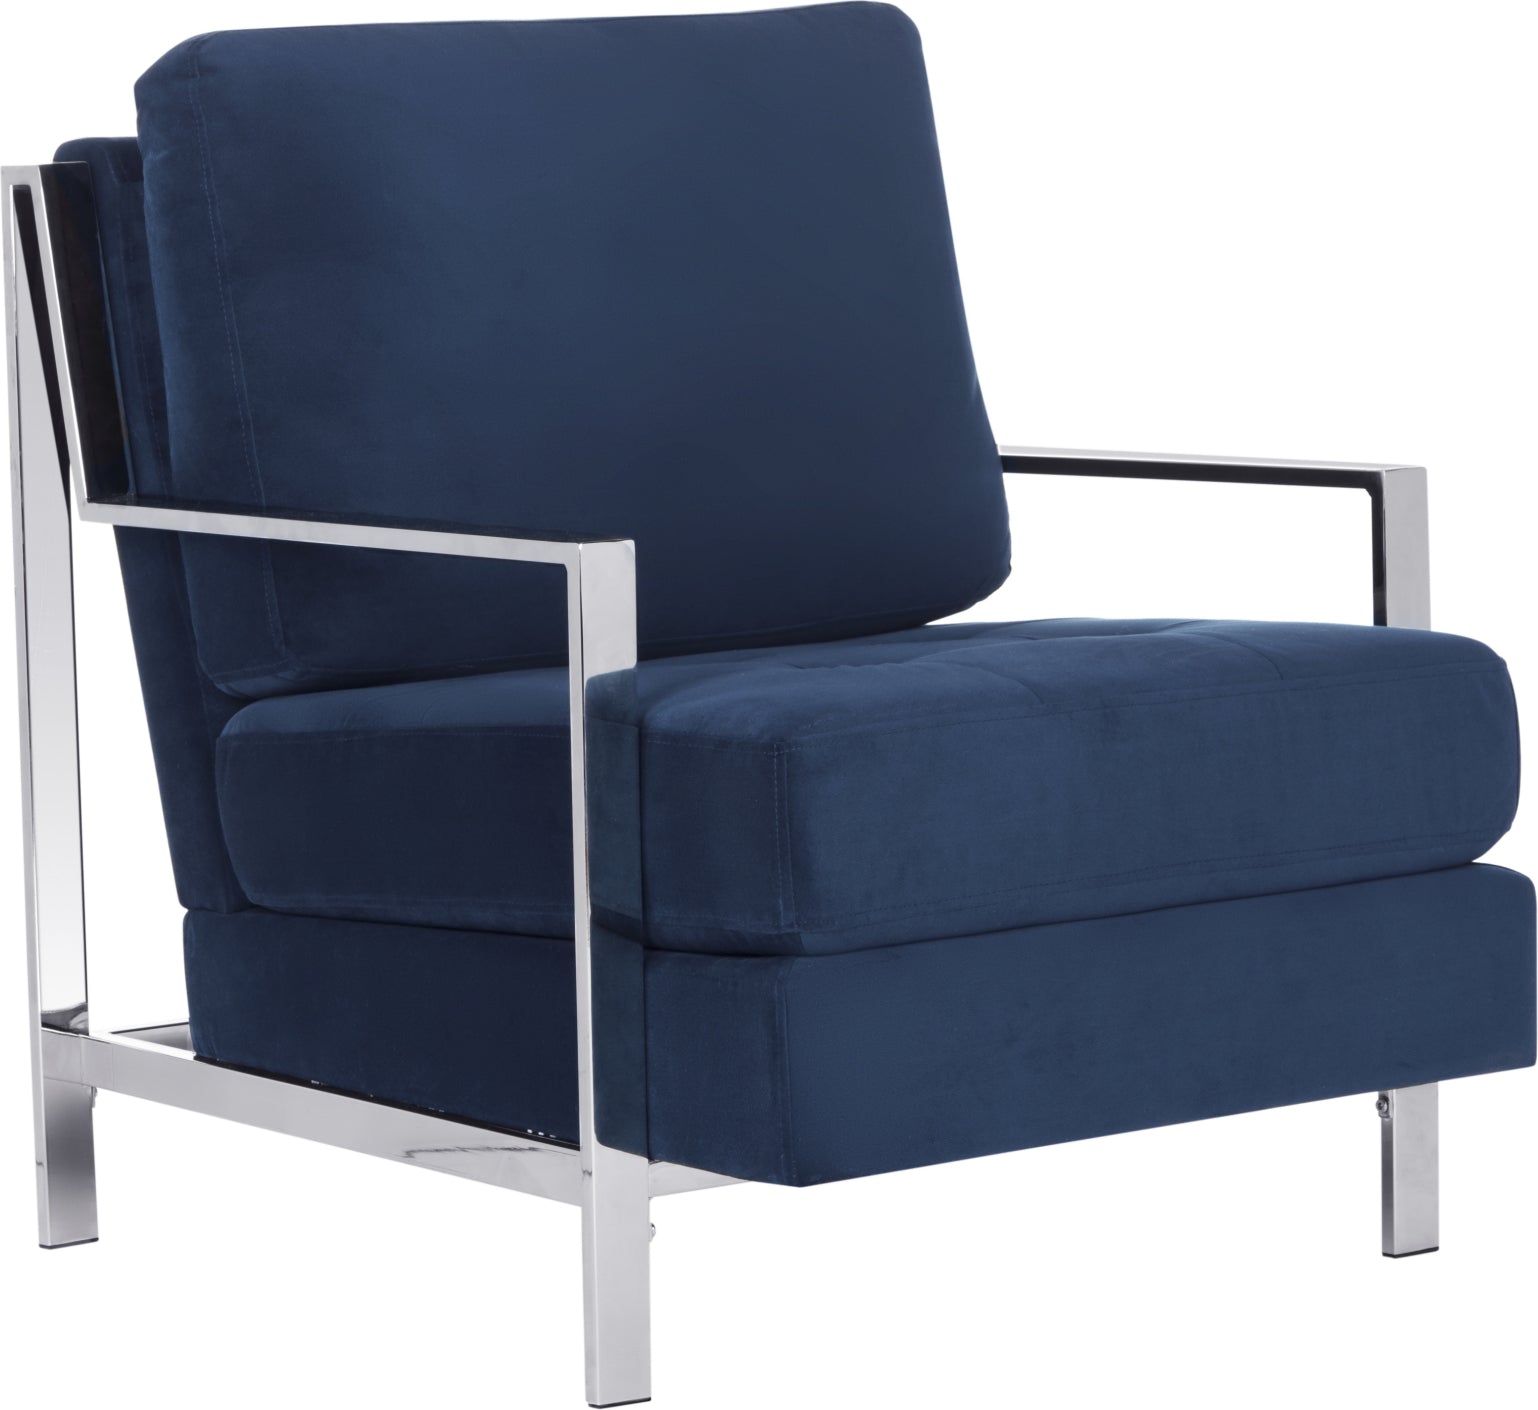 Safavieh Walden Modern Tufted Velvet Chrome Accent Chair Navy Furniture main image